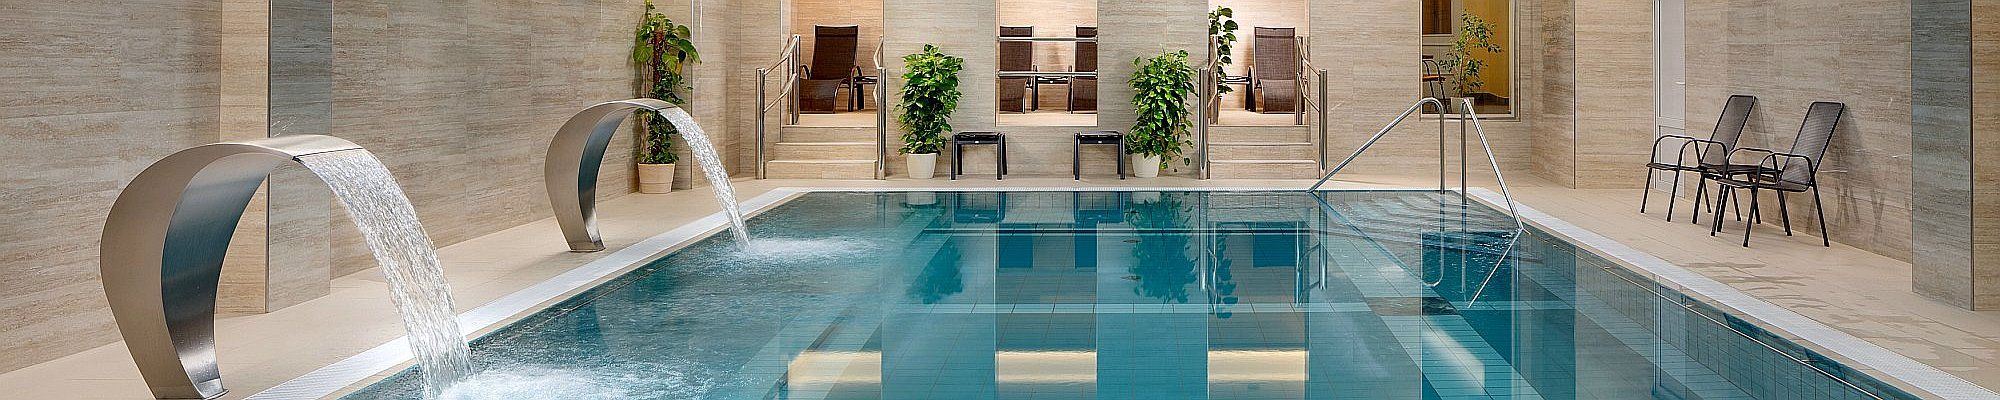 Vltava Ensana Health Spa Hotel - Schwimmbad